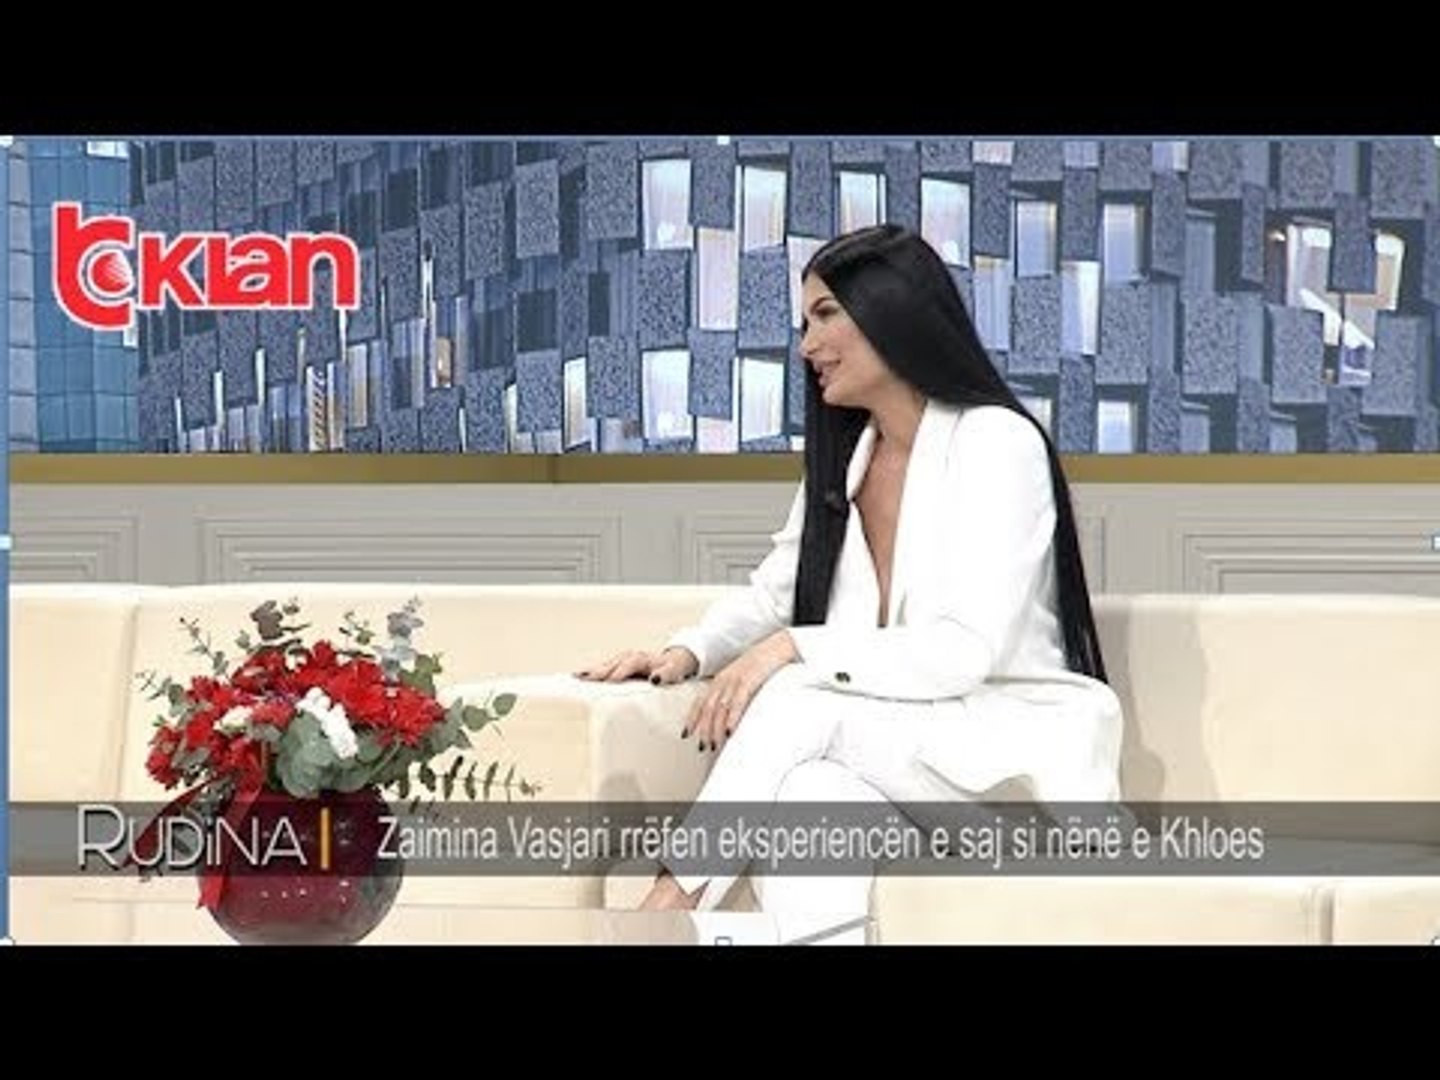 Rudina - Zaimina Vasjari rrefen eksperiencen e saj si nene e Khloes! (18 mars 2019)